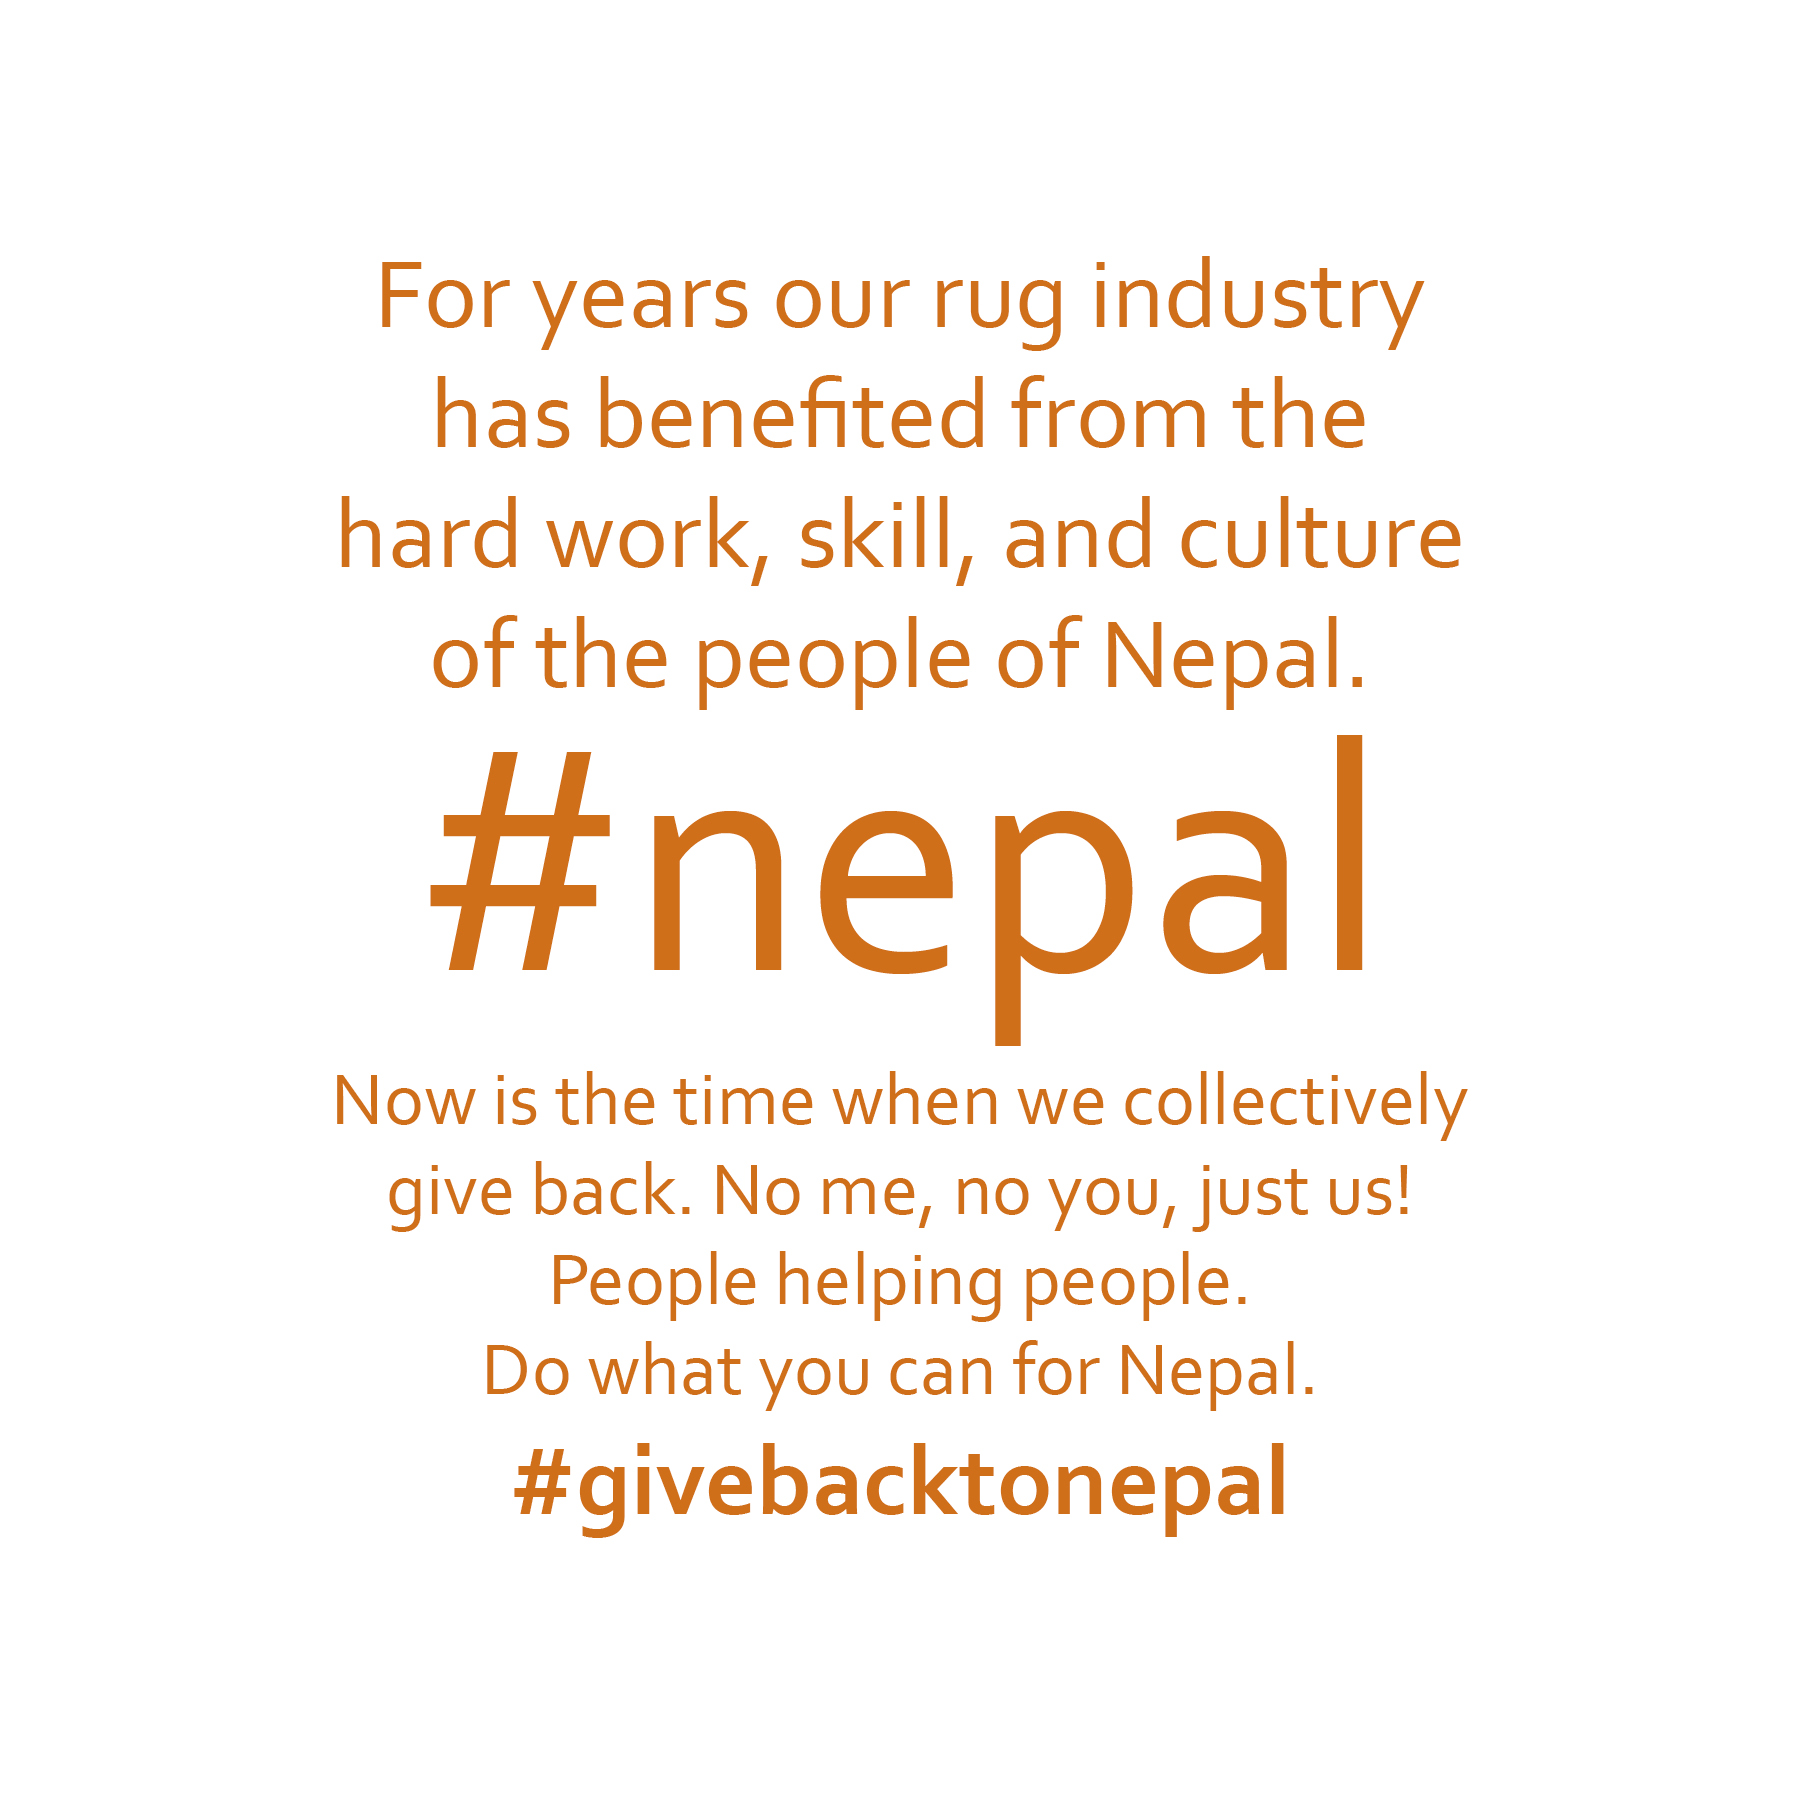 Give Back to Nepal - #givebacktonepal - The Ruggist